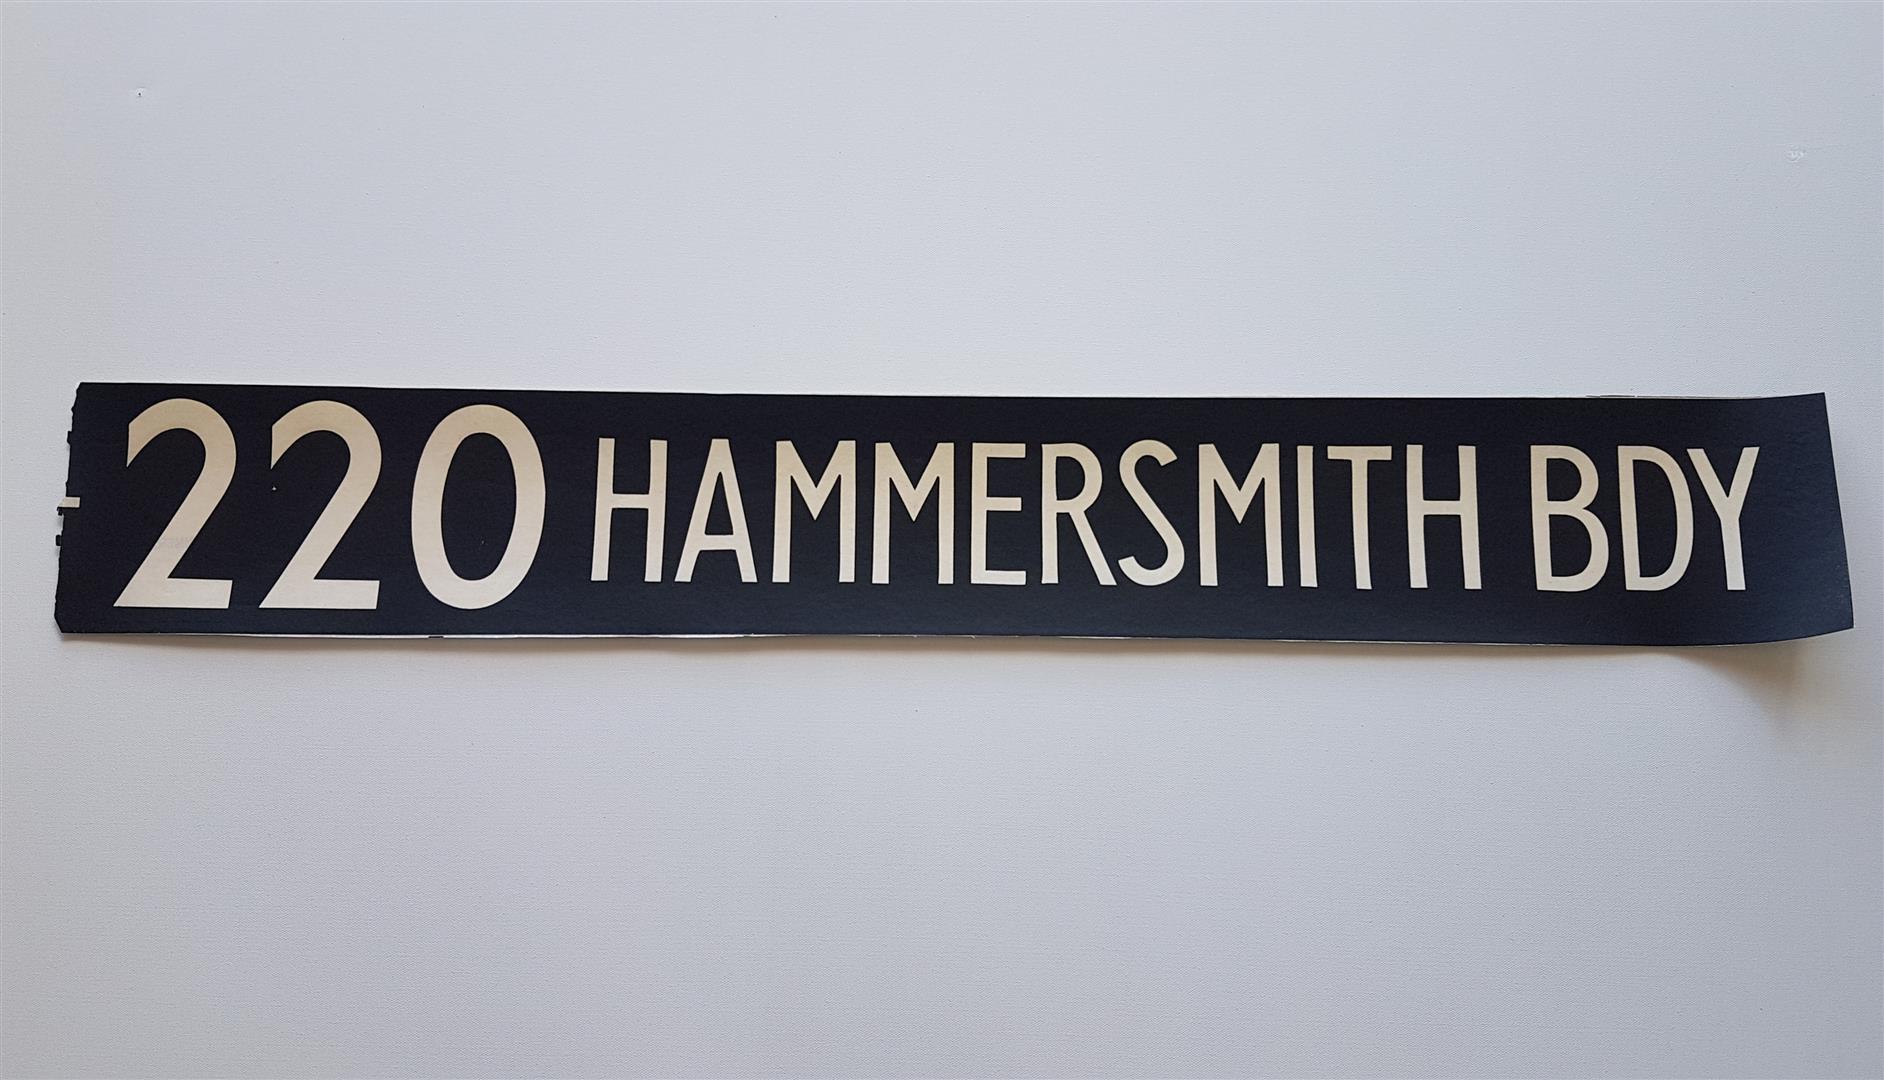 HAMMERSMITH BROADWAY #220 - The Heritage Merchant